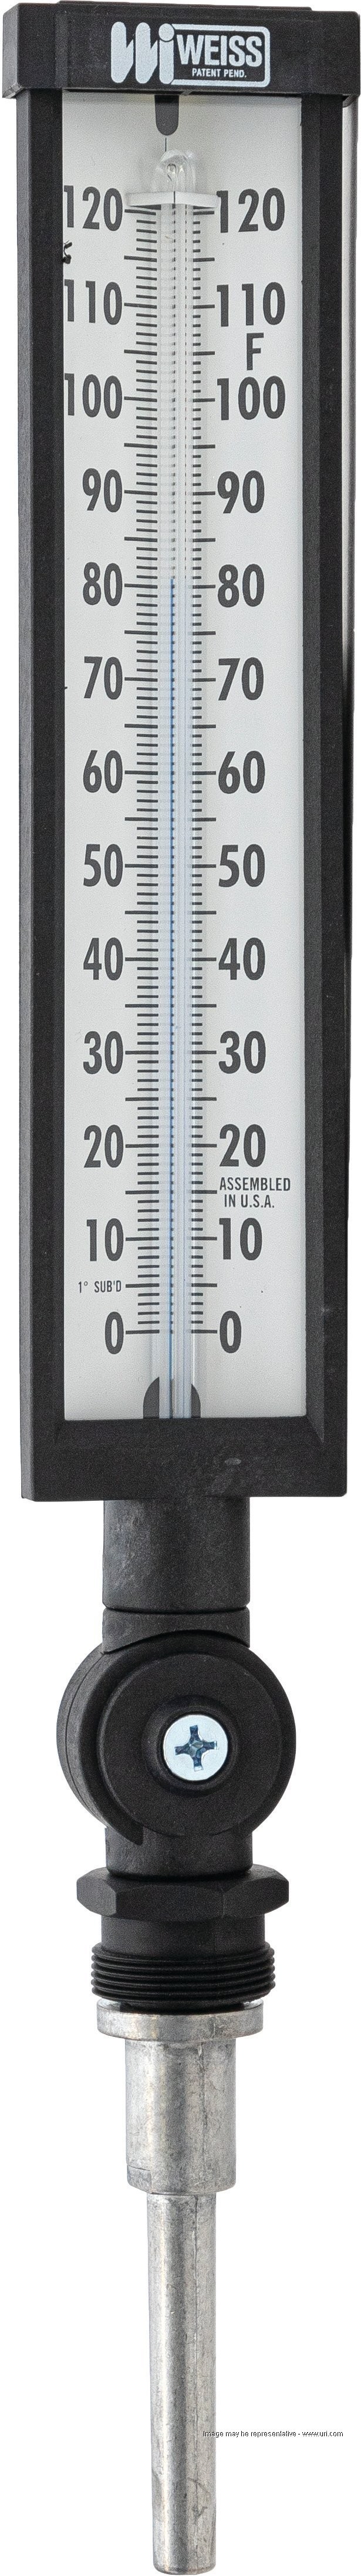 IDN#20320 NEW Weiss Instruments 9VU35-120 Glass Thermometer 0-120F 